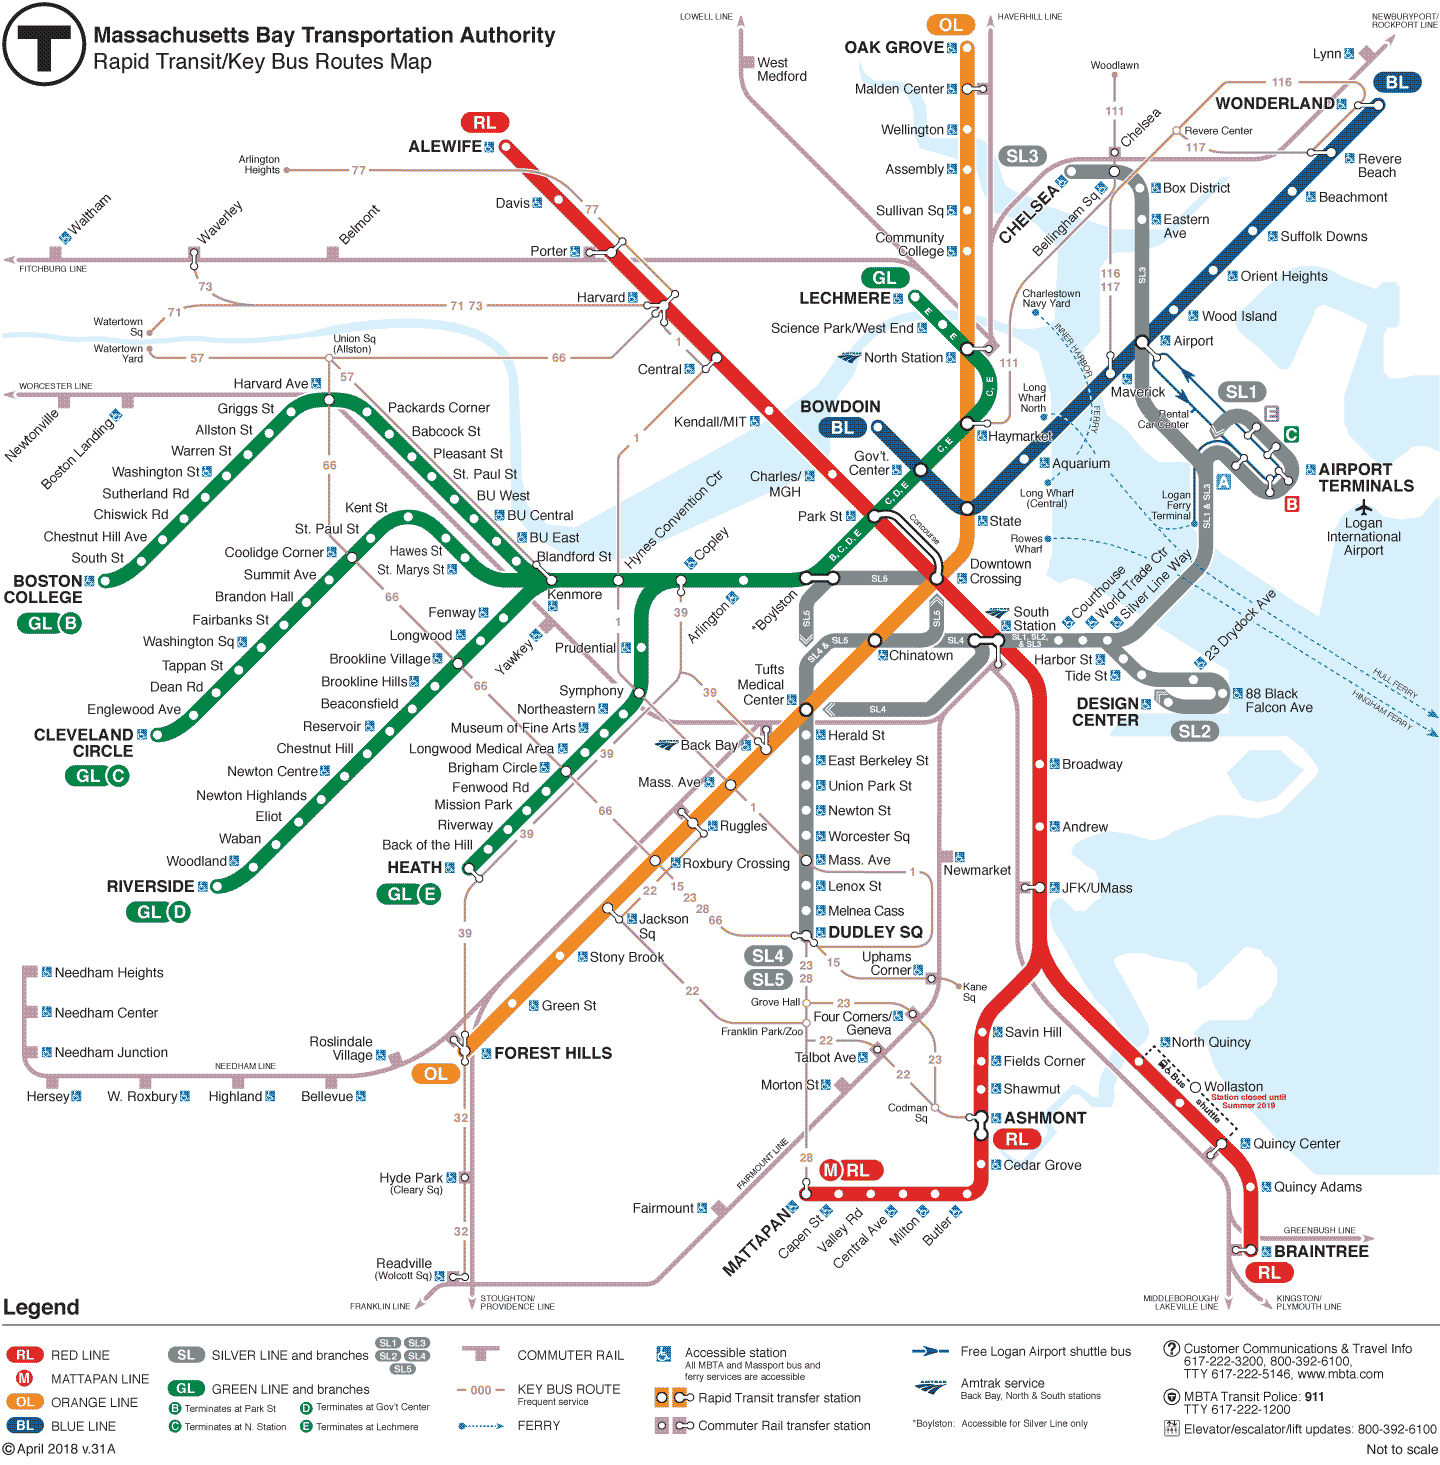 mbta简称为"t",在波士顿坐地铁也可以叫"坐